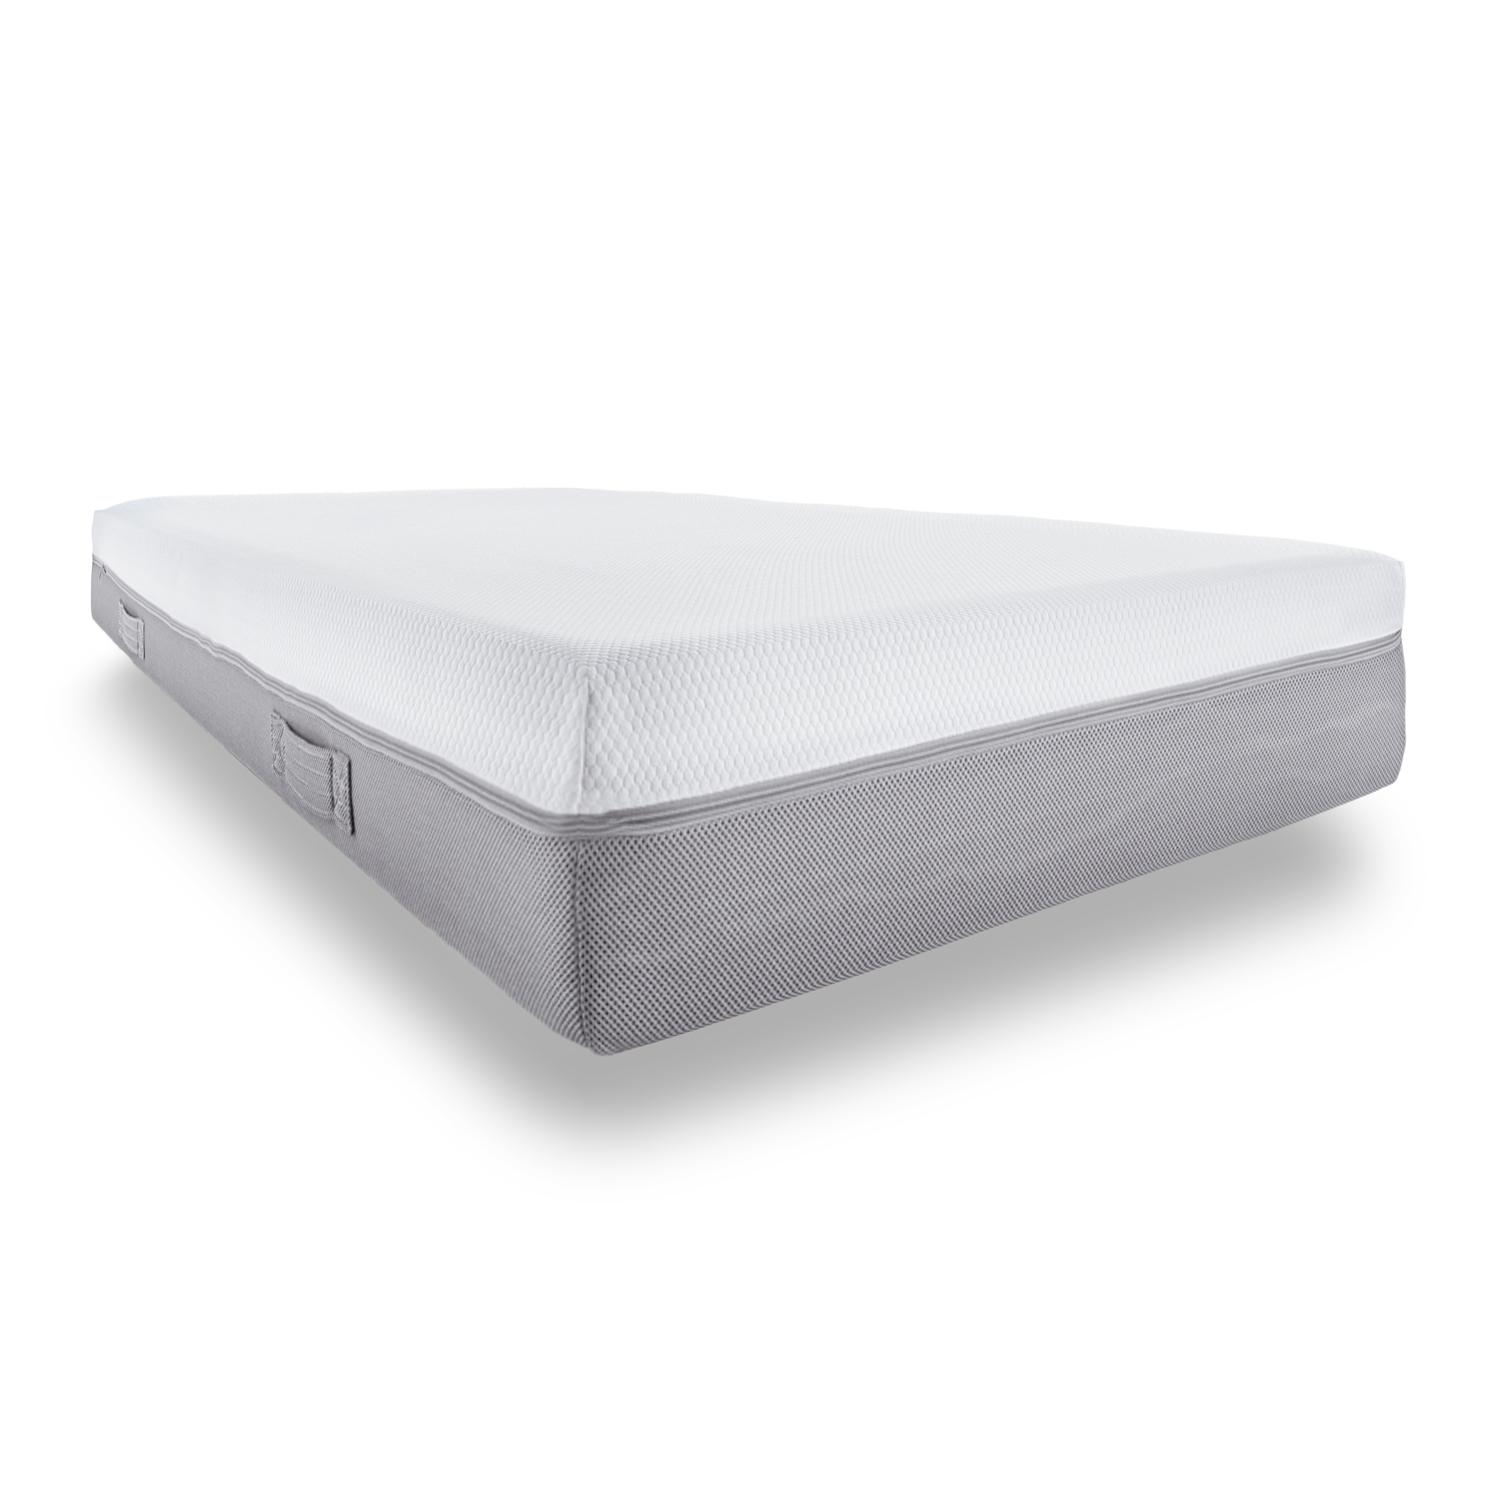 Sleezzz Premium viscoelastic mattress 80 x 200 cm, height 20 cm, firmness level H2/H3, with reversible handles